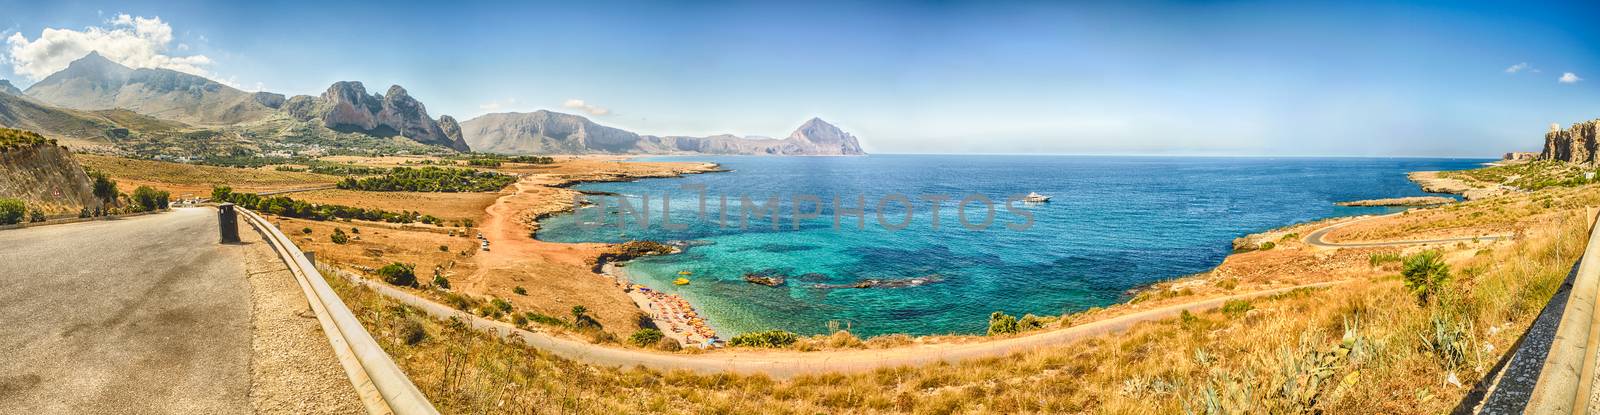 Panoramic View Over Sicilian Coastline and Cofano Mountain by marcorubino